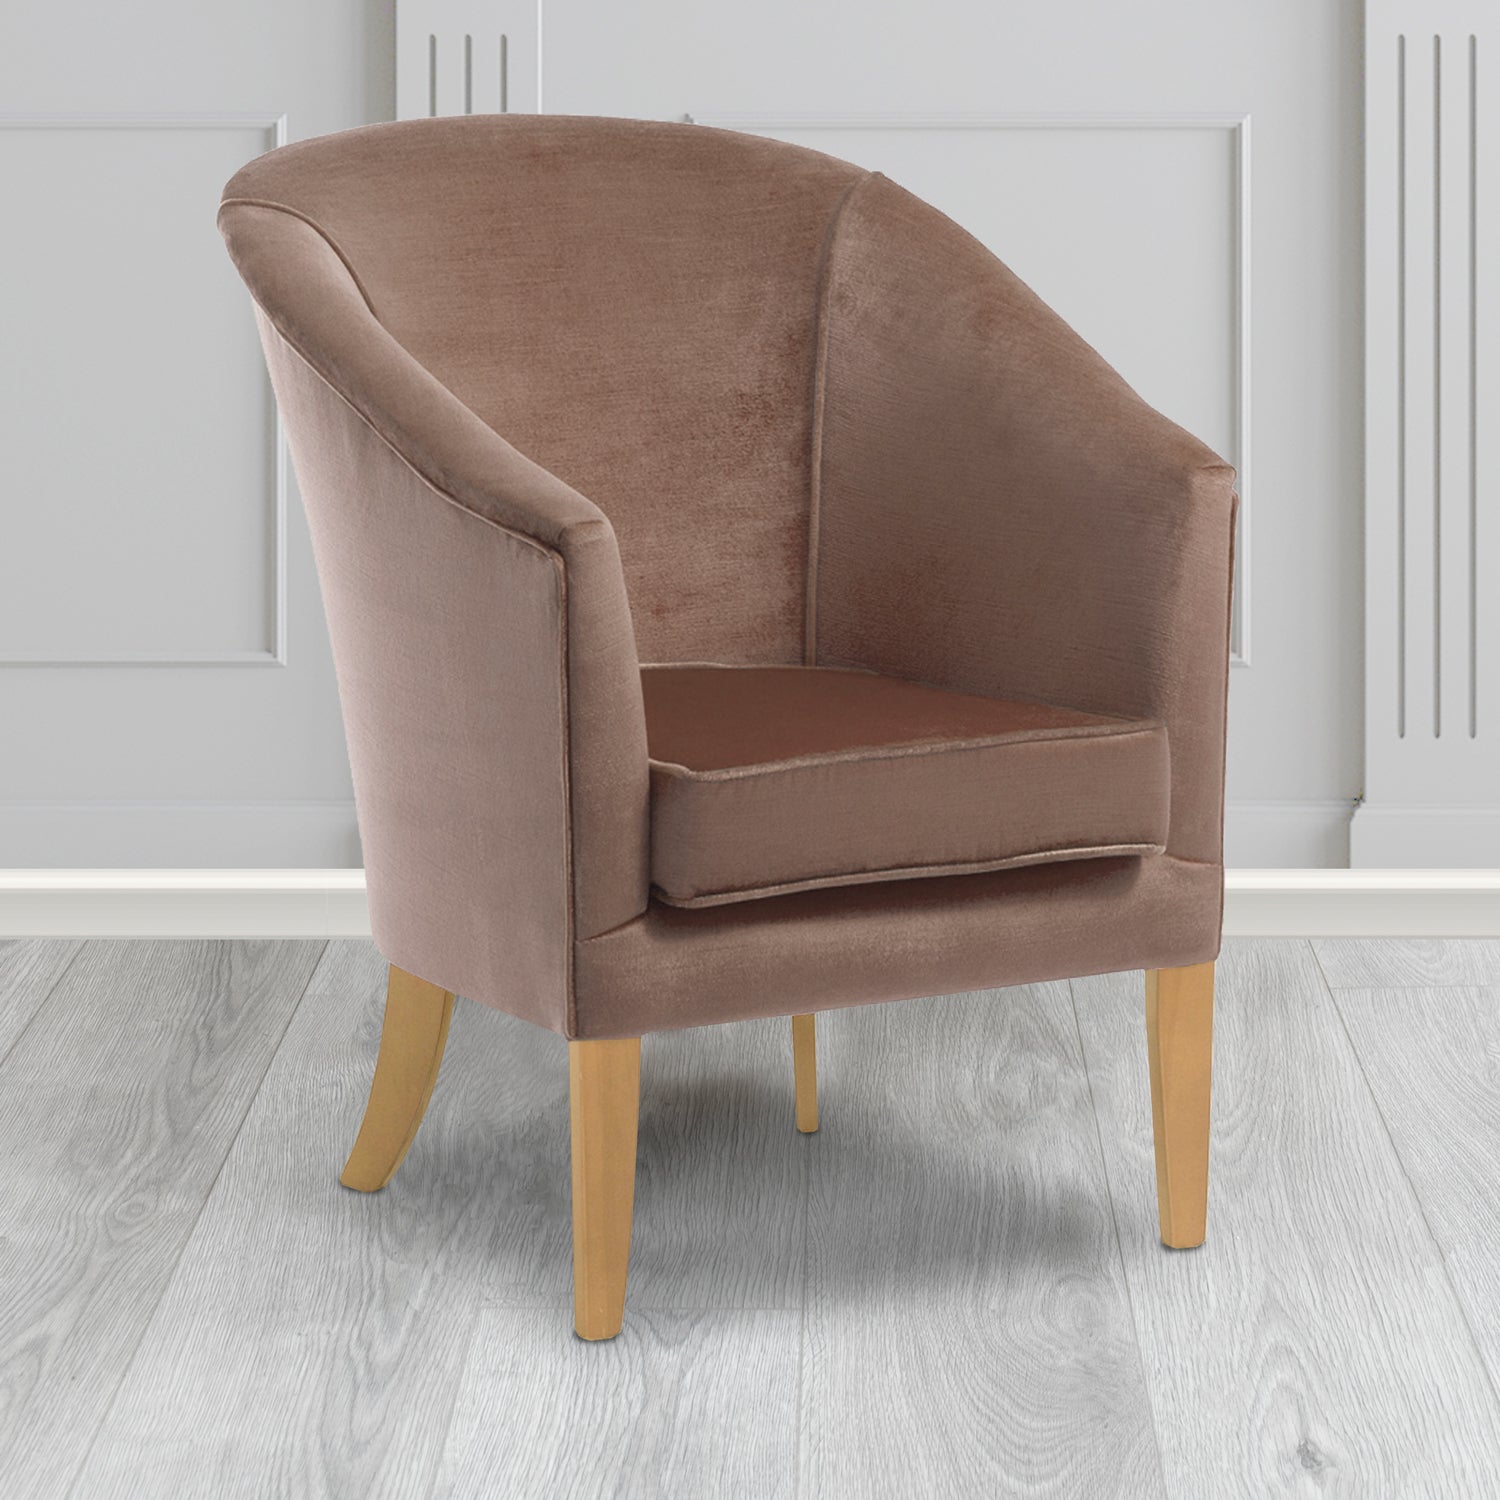 Burton Tub Chair in Noble 708 Truffle Crib 5 Velvet Fabric - Water Resistant - The Tub Chair Shop